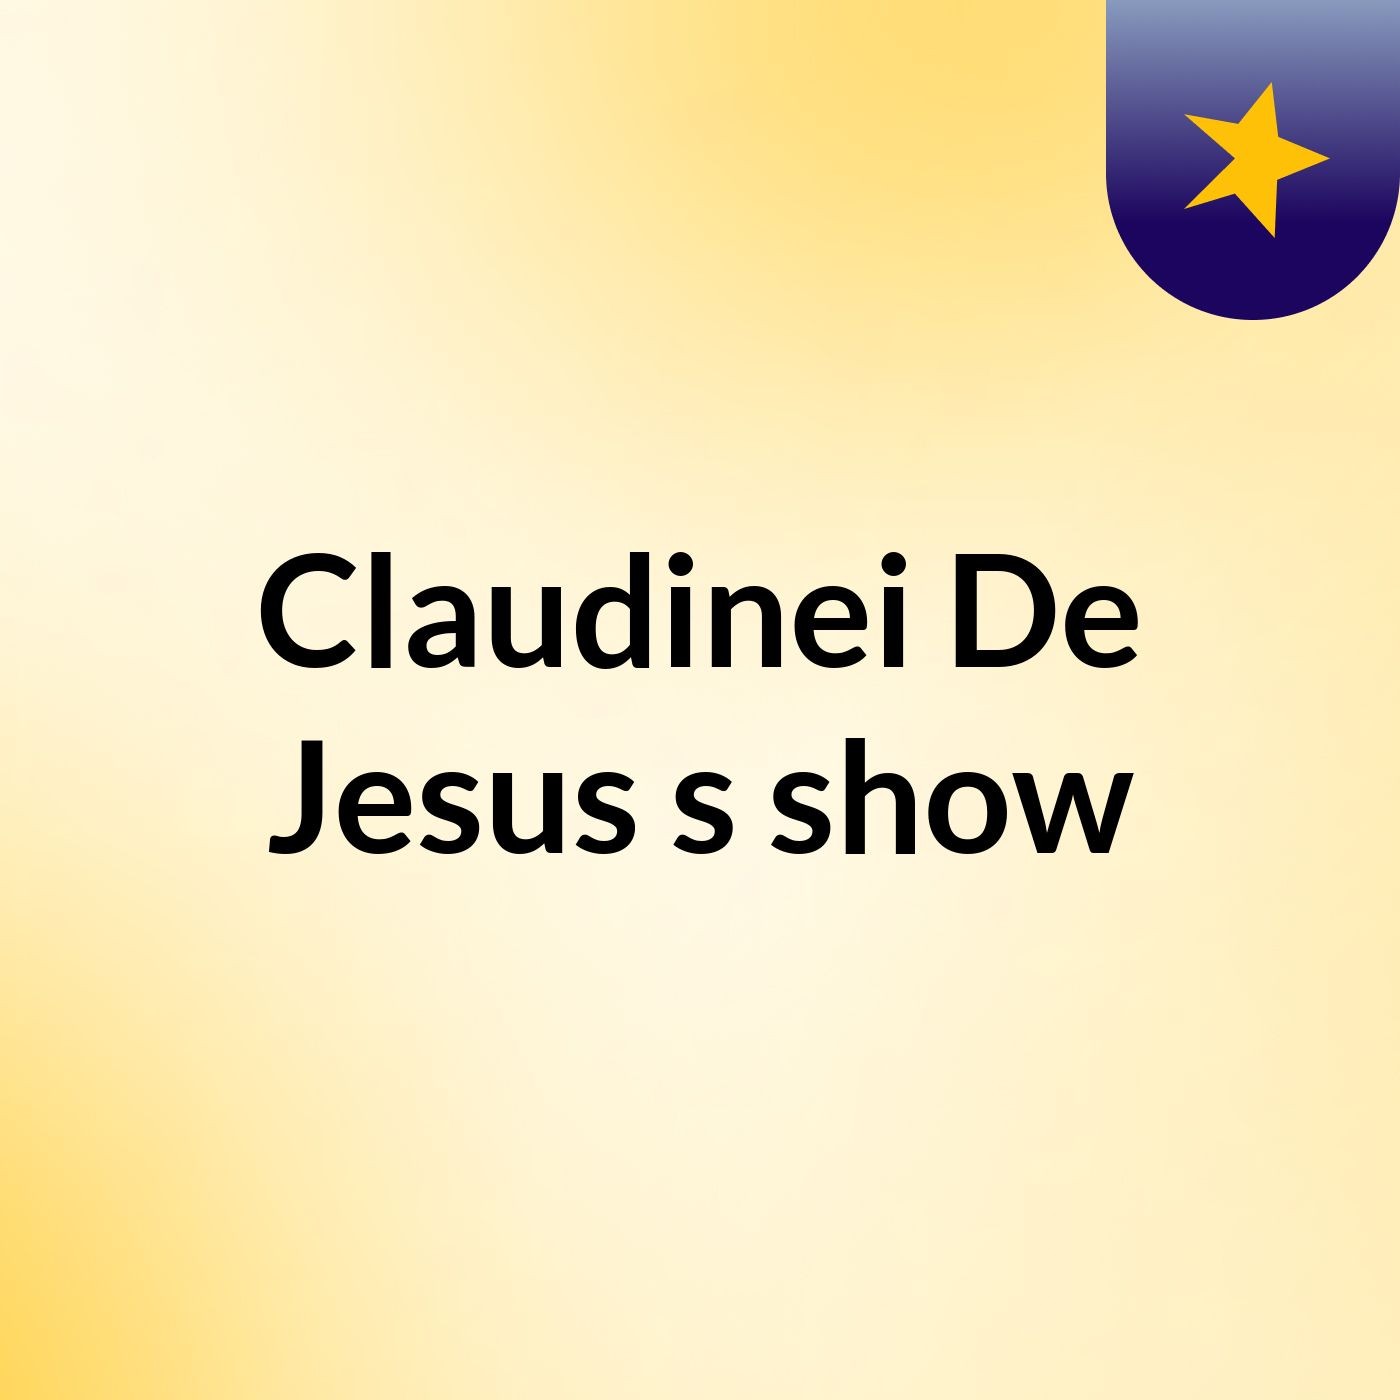 Claudinei De Jesus's show